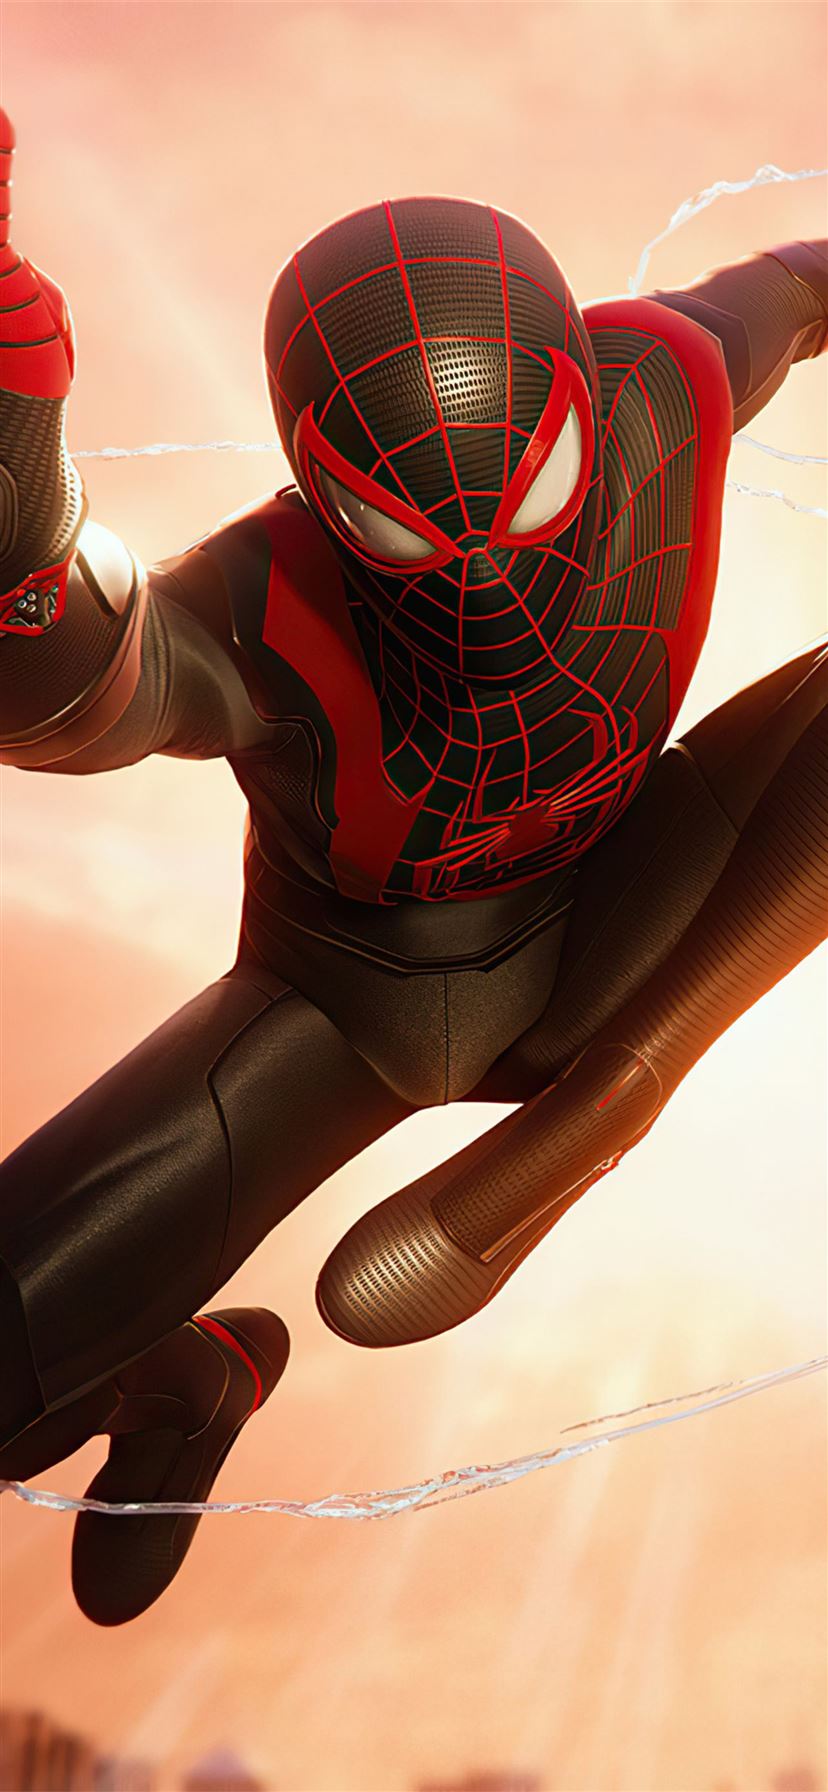 4k marvels spiderman miles morales iPhone X Wallpaper Free Download